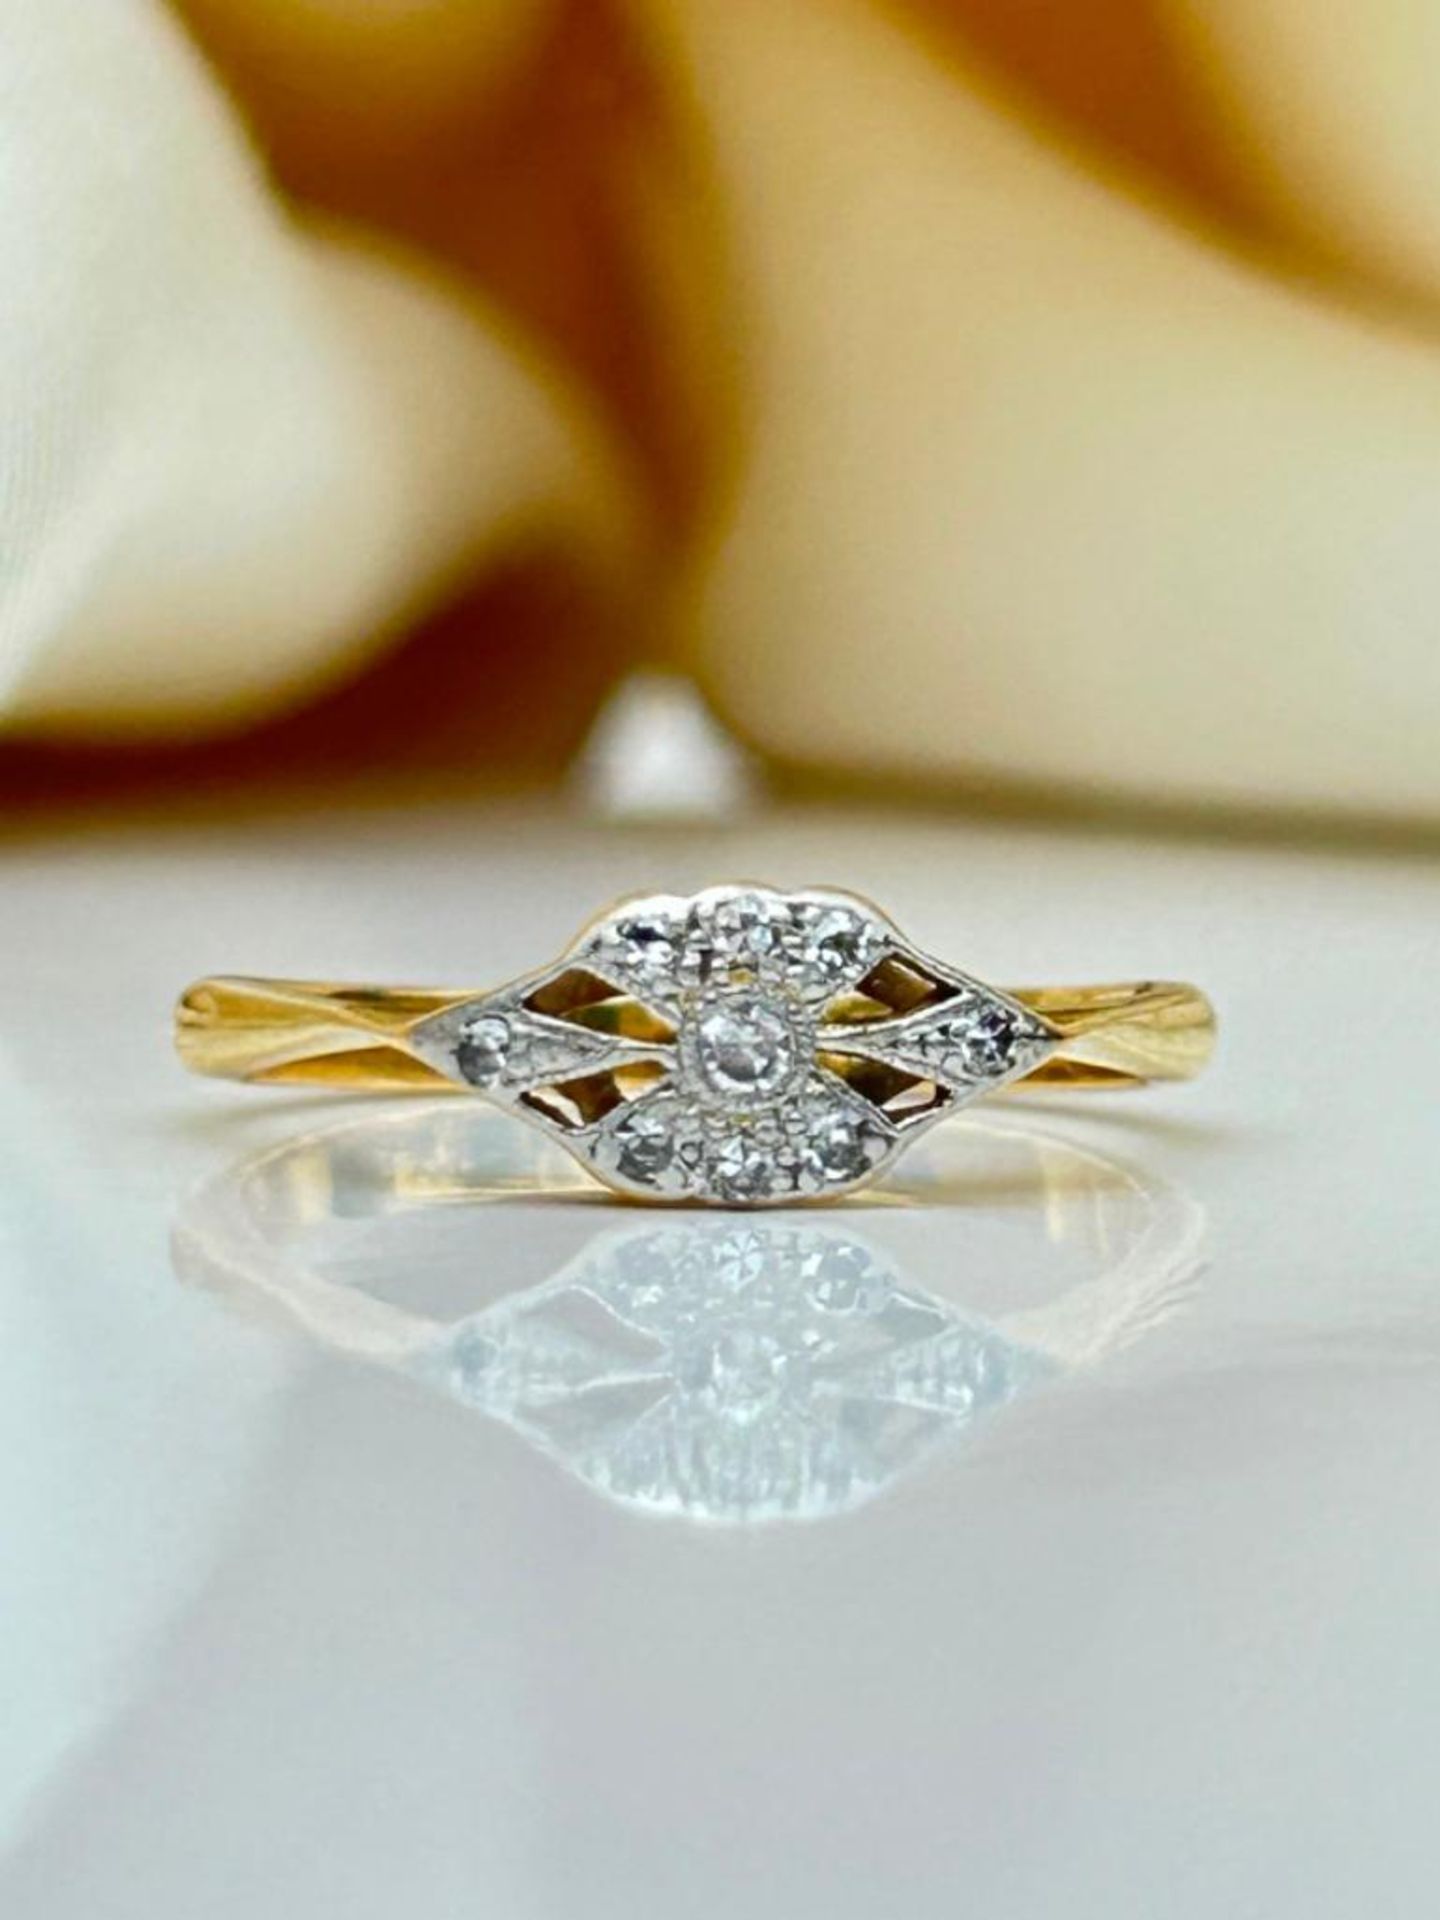 Sweet Antique Art Deco Era 18ct Yellow Gold Diamond Ring